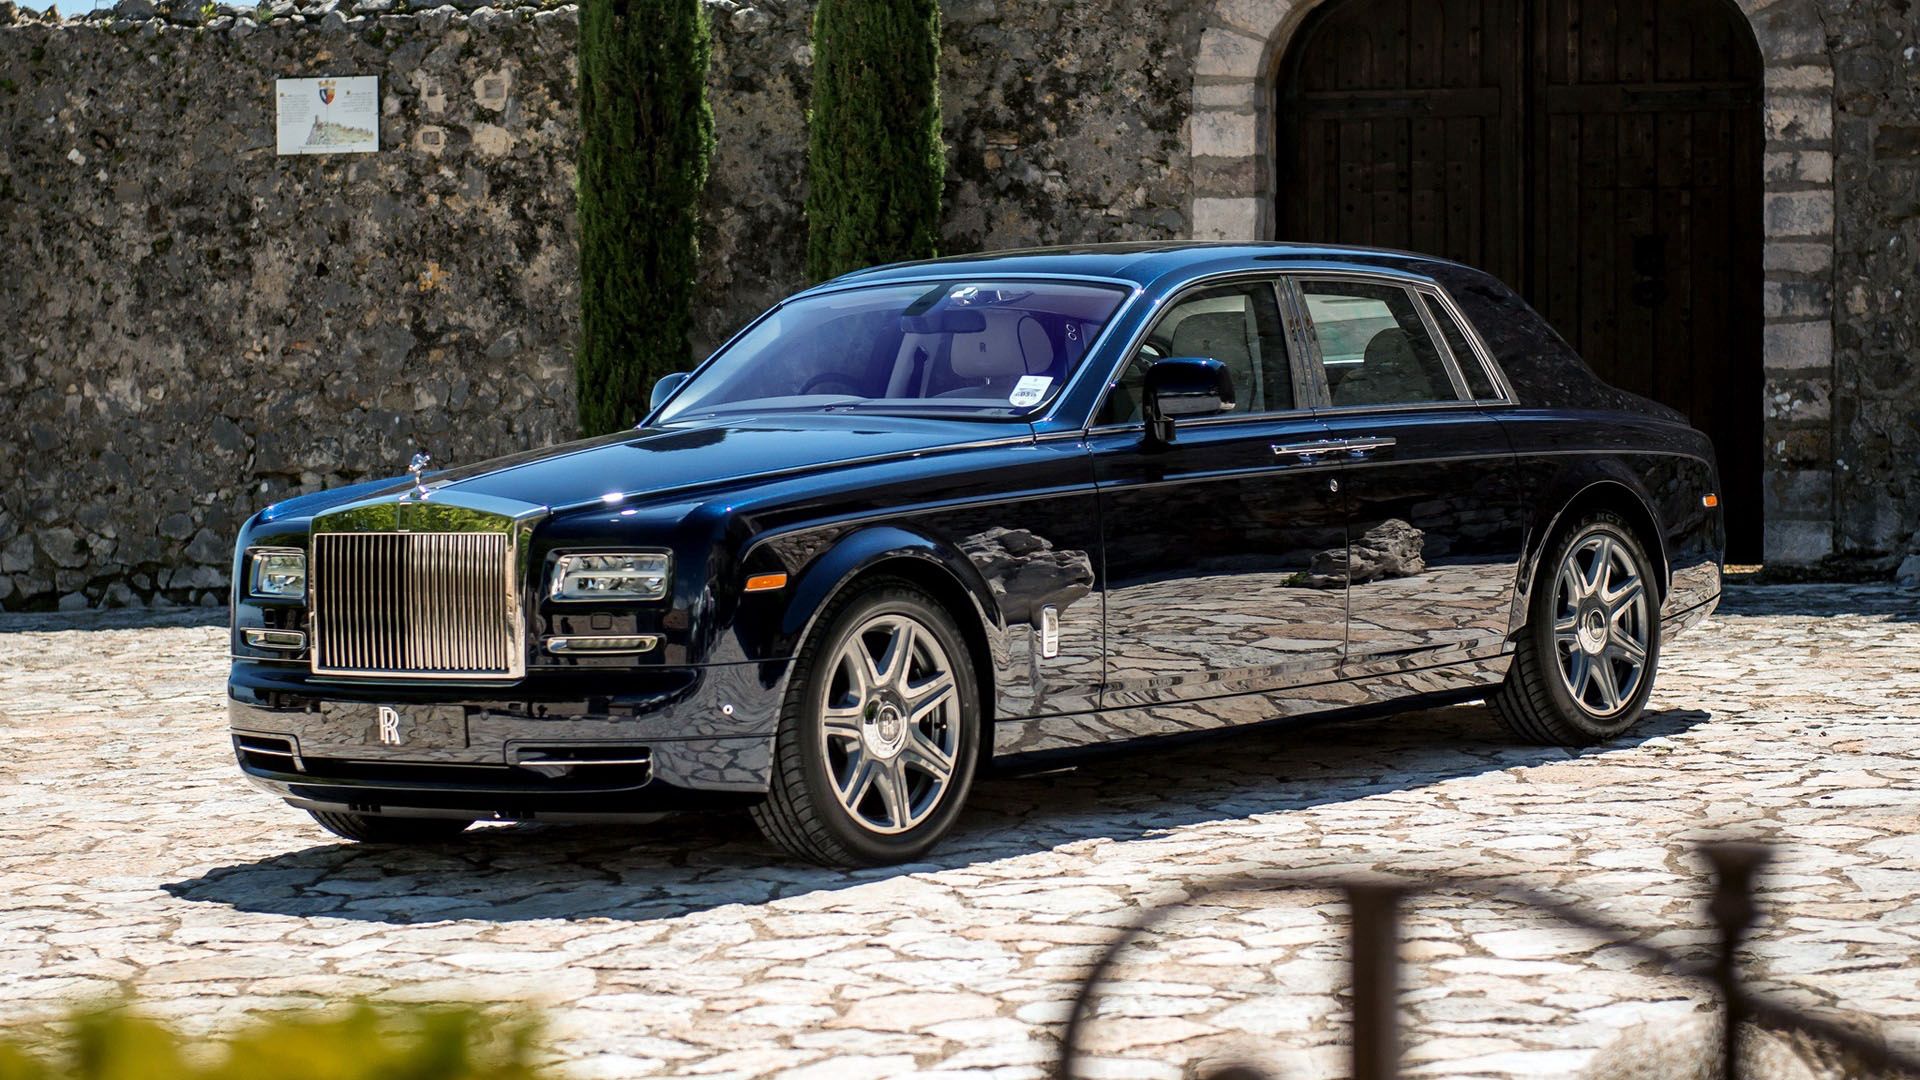 Rolls-Royce rolls-royce phantom, series 2, cars Free Stock Photos